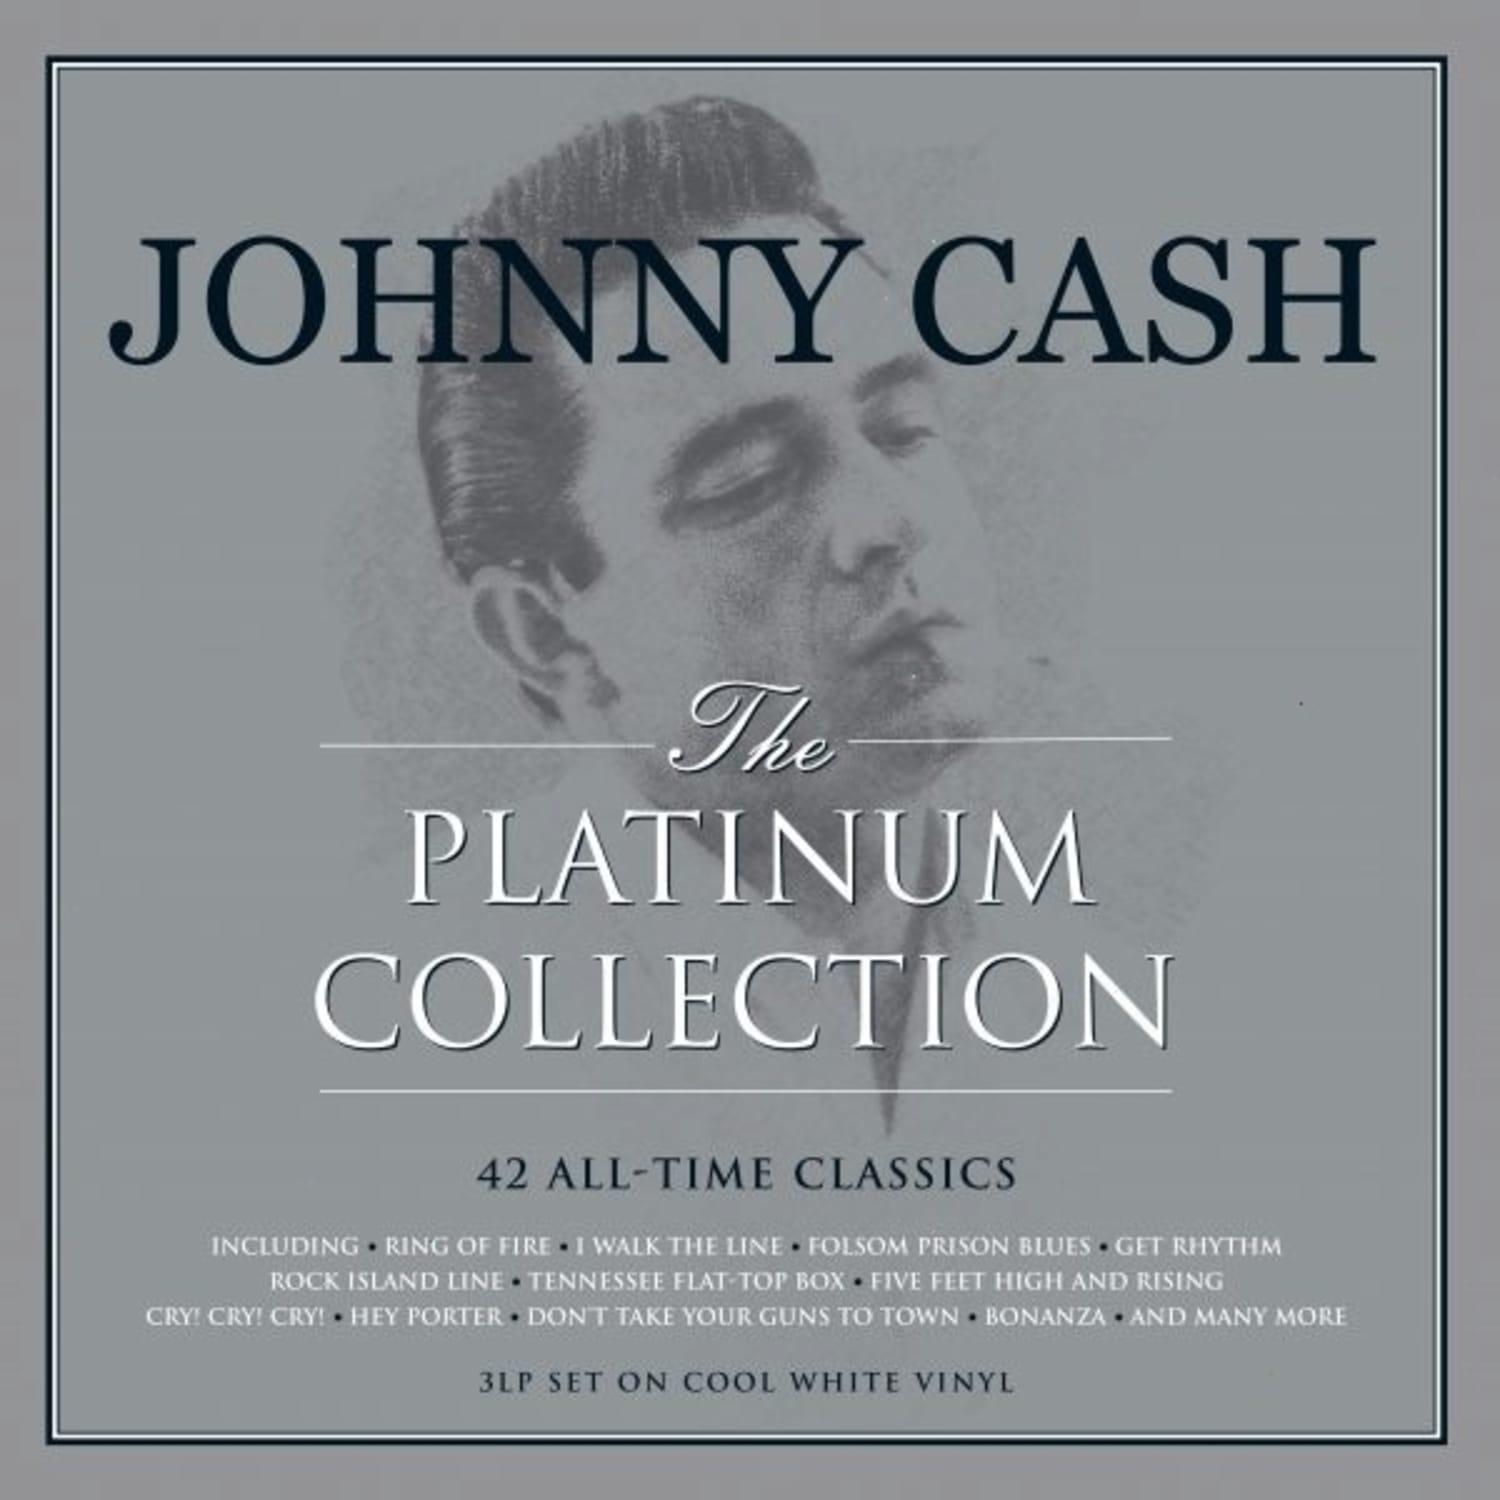 JOHNNY CASH – The Platinum Collection [Gatefold, 3LP White Vinyl Set] on MovieShack